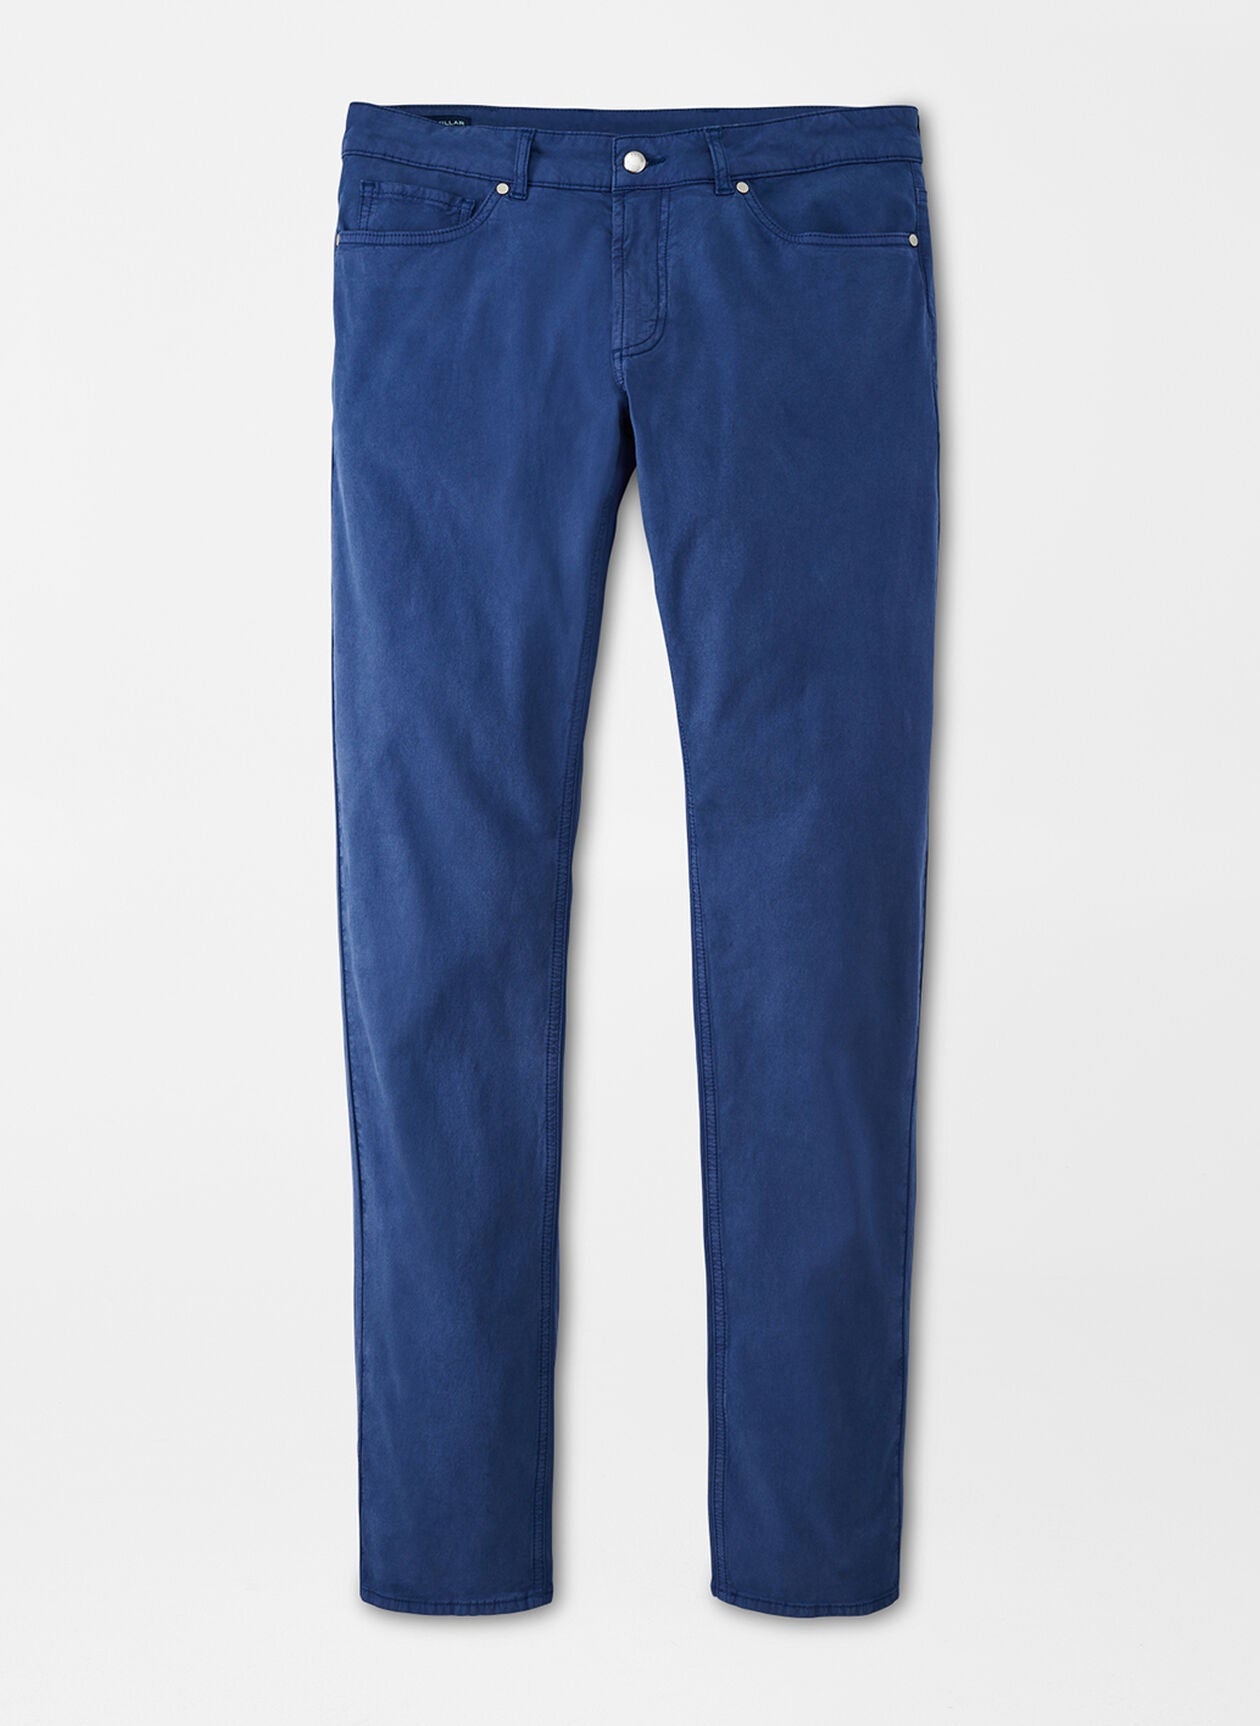 NWT Peter Millar Collection Wayfare Five Pocket Pants Riviera Blue